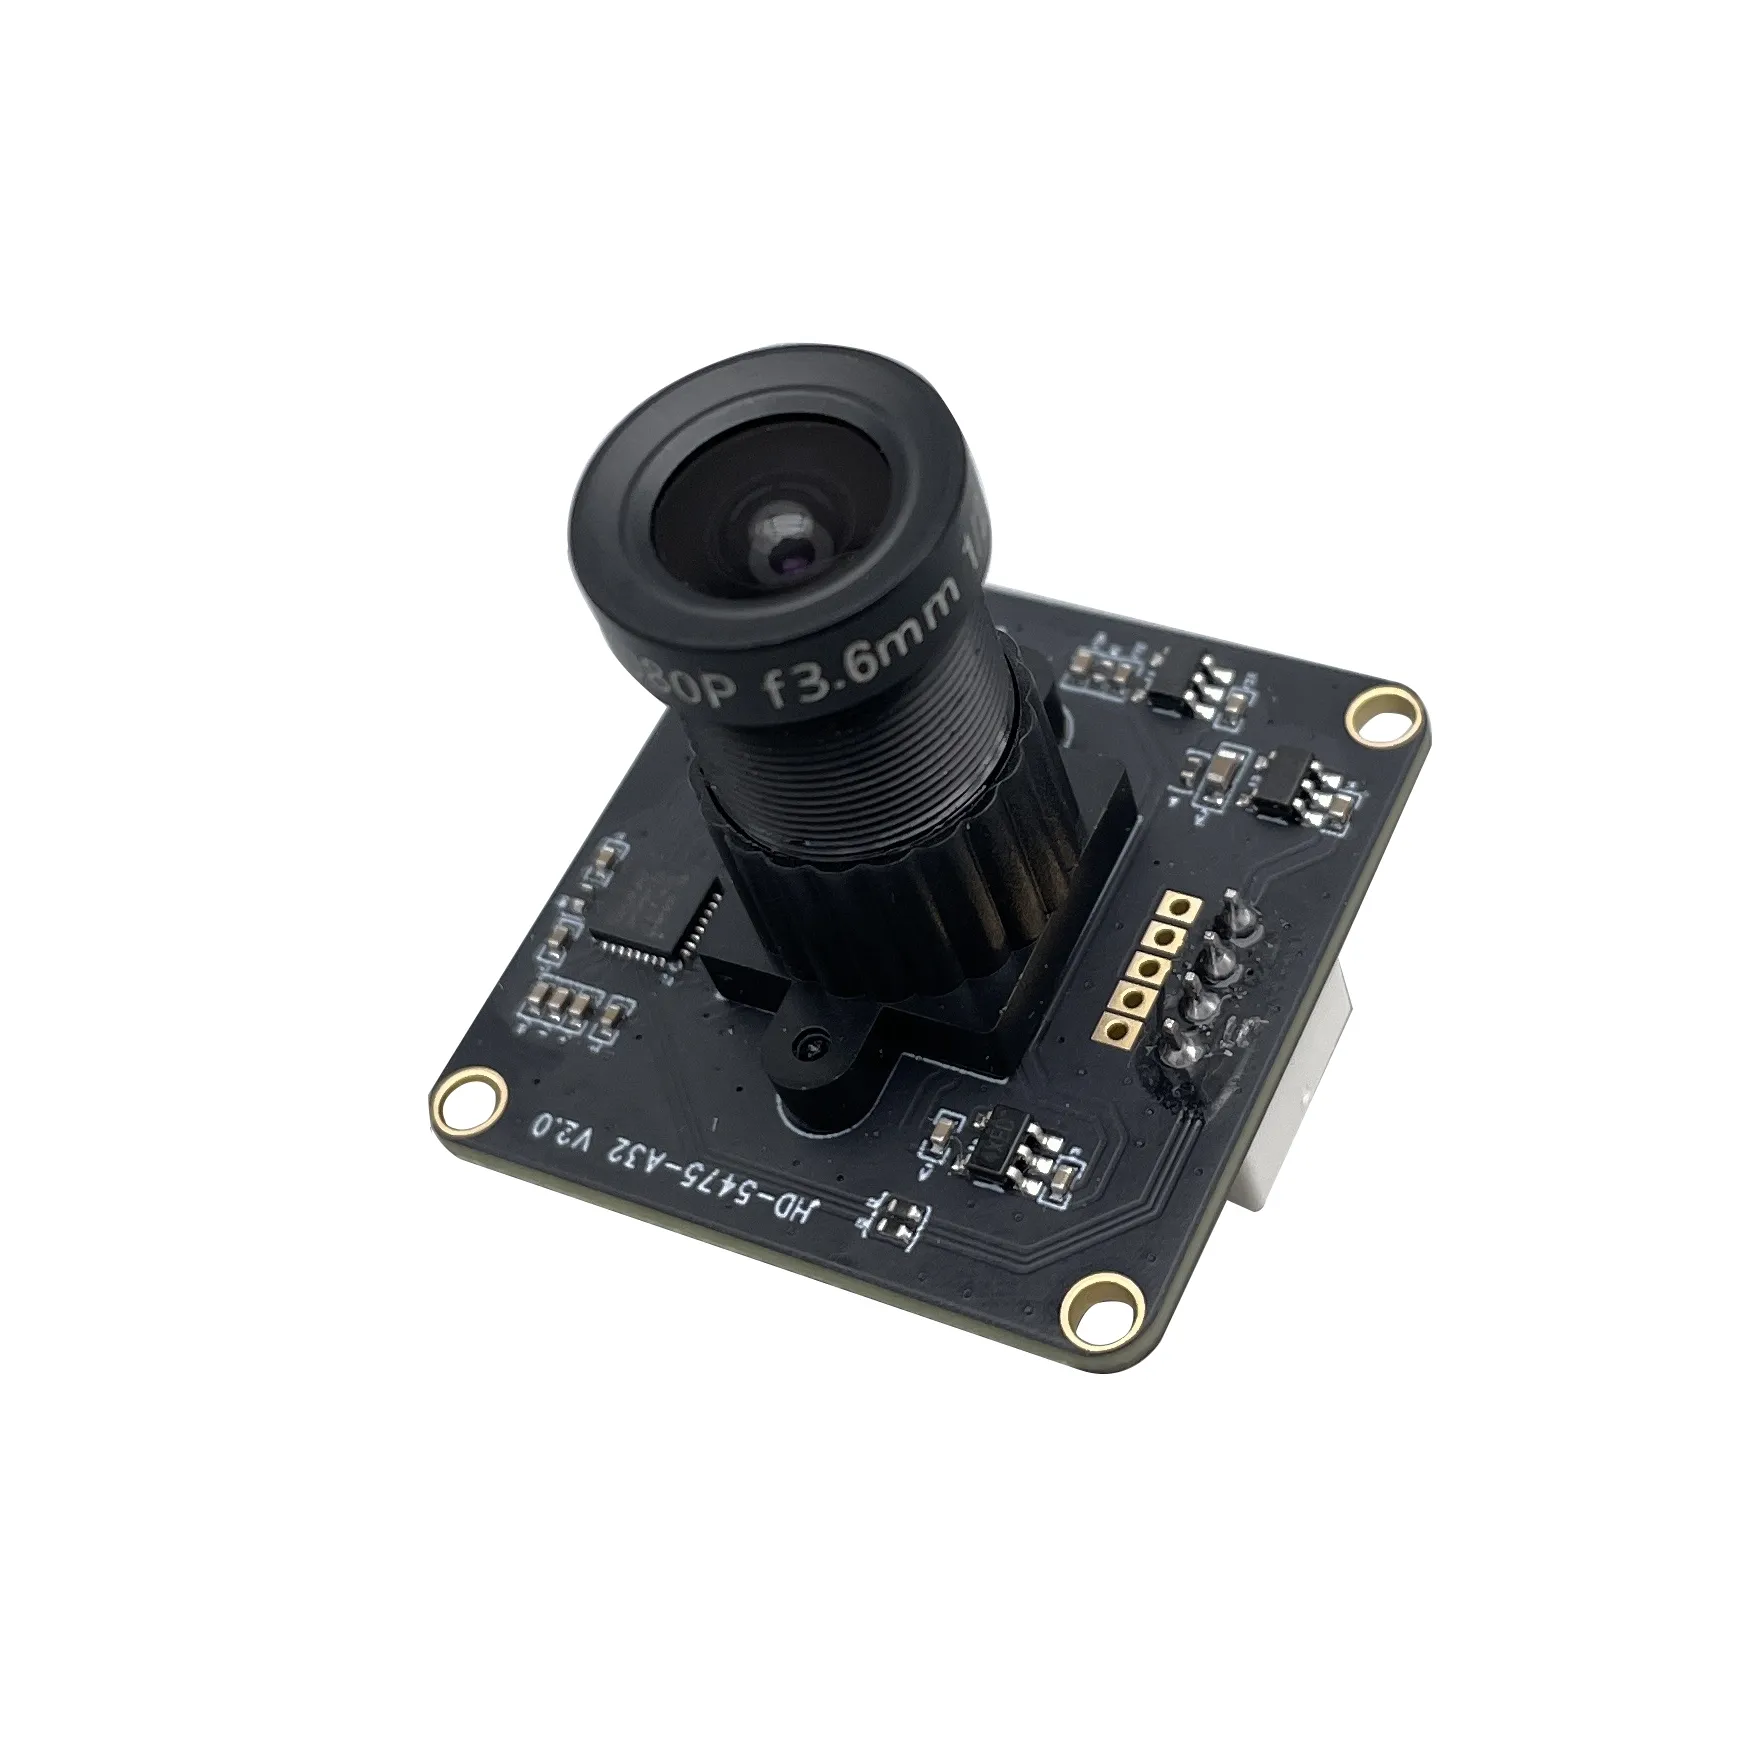 GC1054 Sensor CMOS 1MP 720p Hd modul kamera USB inframerah fokus tetap dinamis mikro lebar untuk kamera mesin Atm